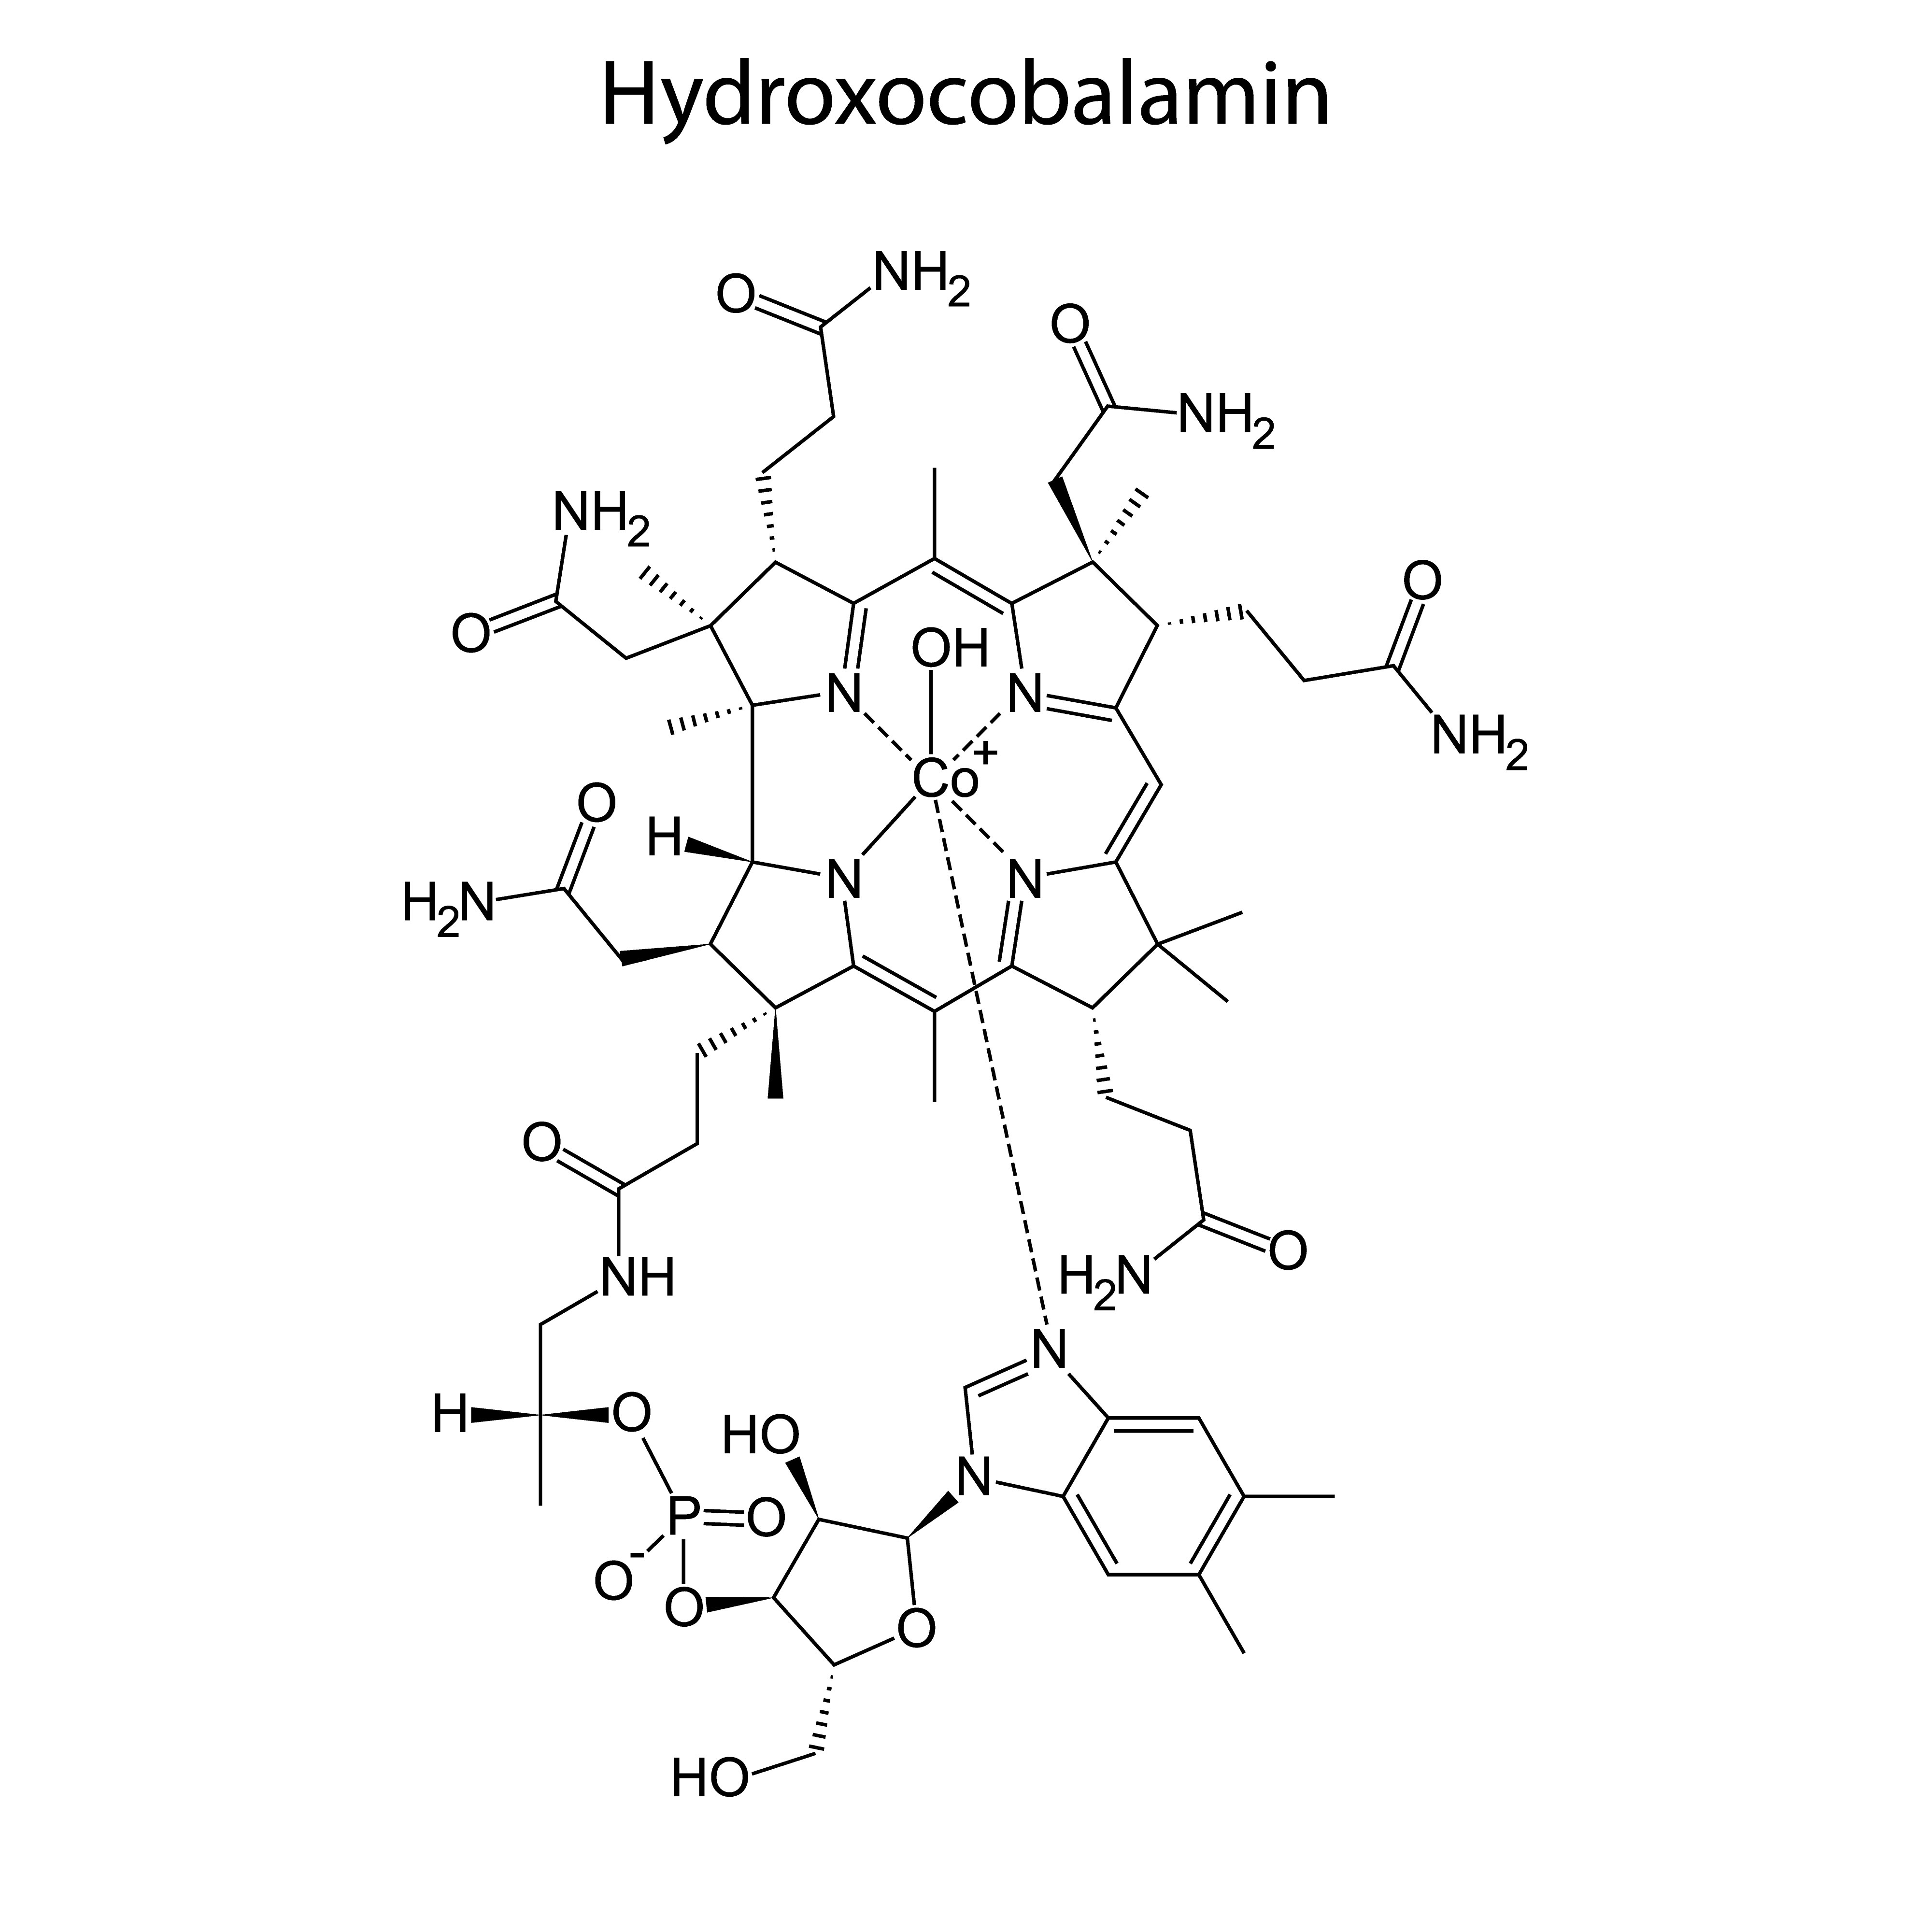 Hudroxycobalamin - another form of Vitamin B12, useful in methylation disorder